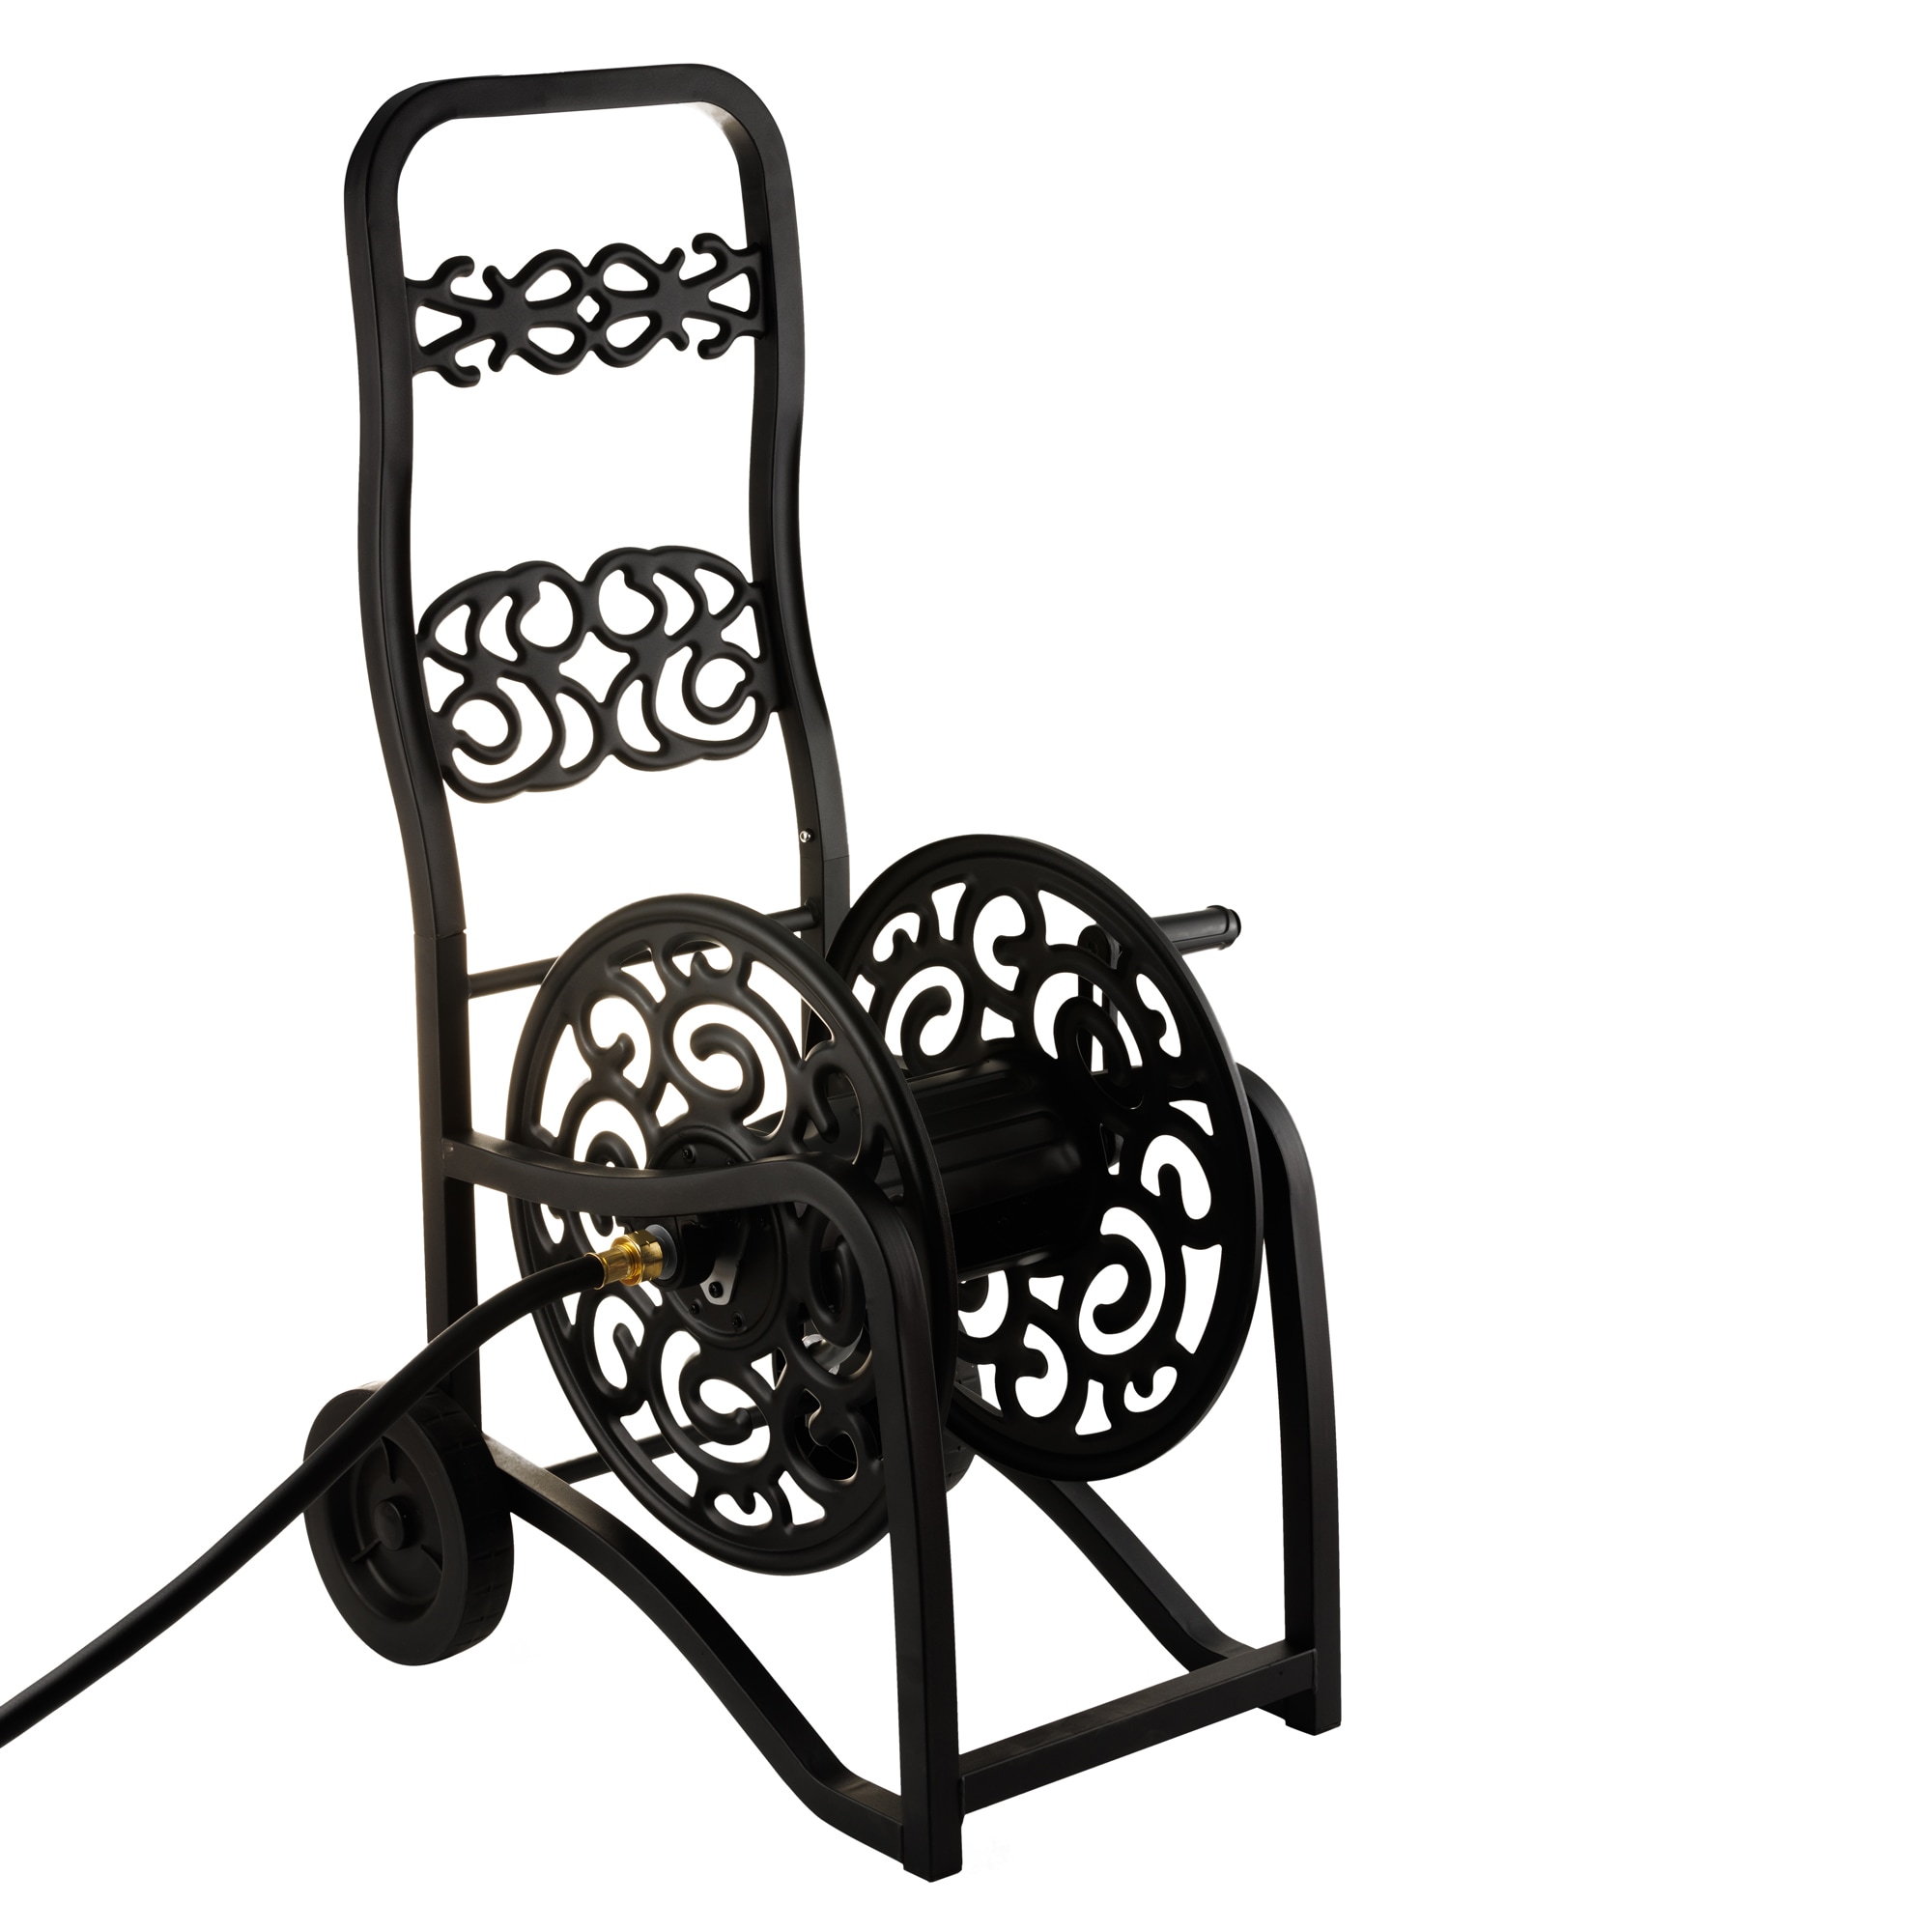 Shop Garden Hose Reel Wheel online